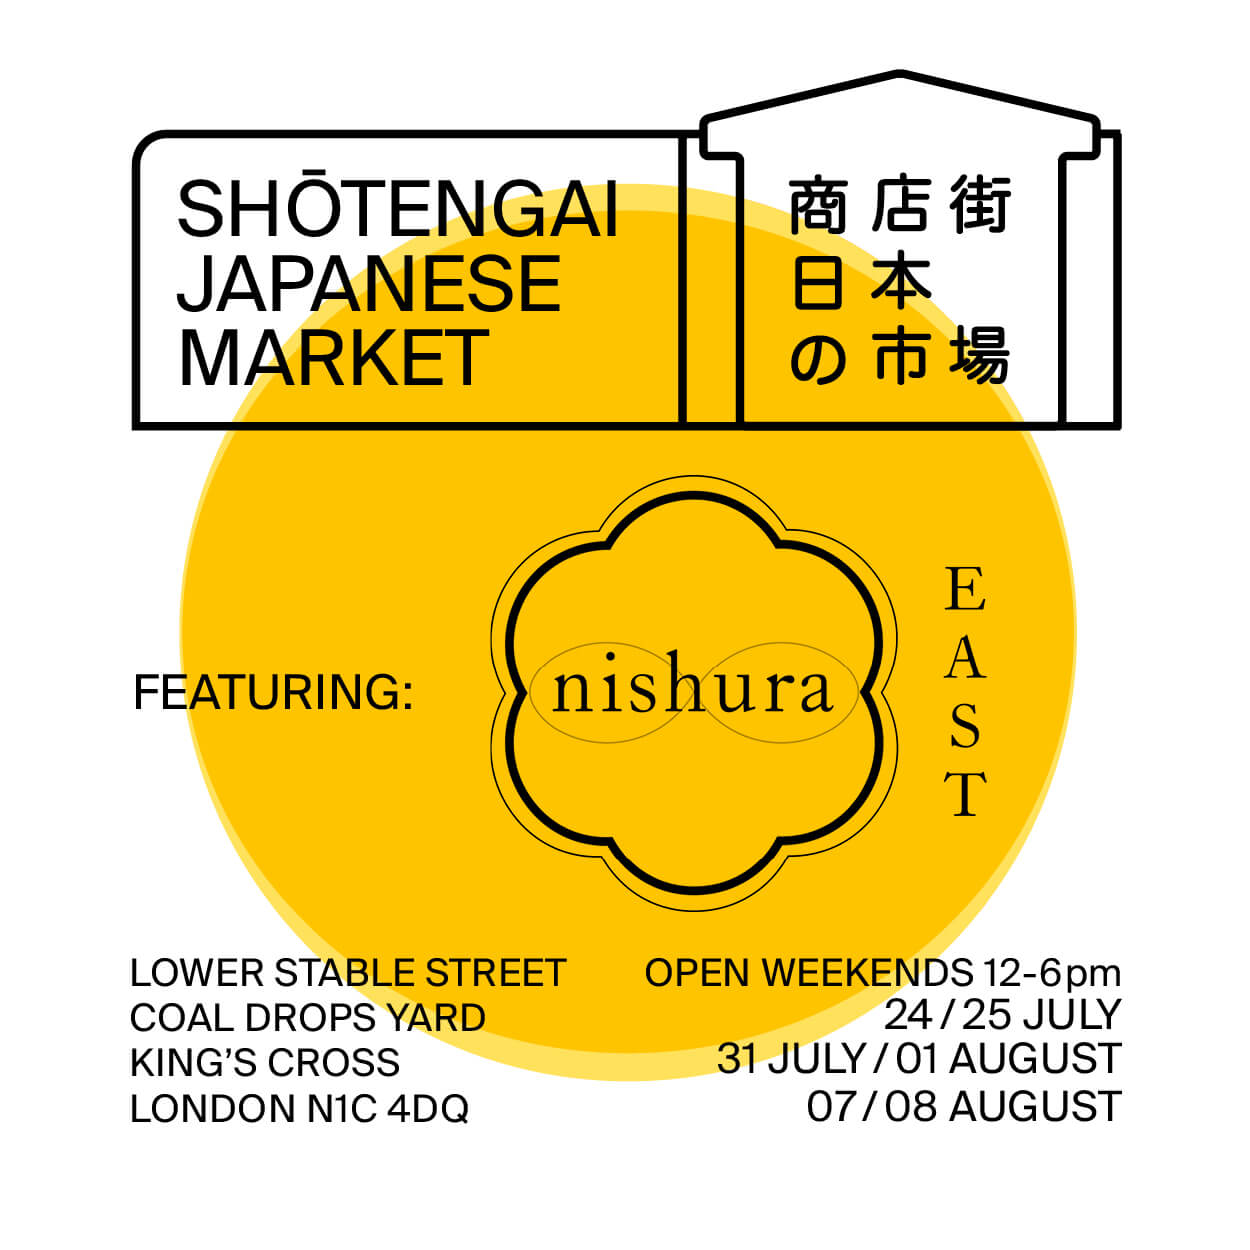 NishuraEast at the Shotengai Japanese Market